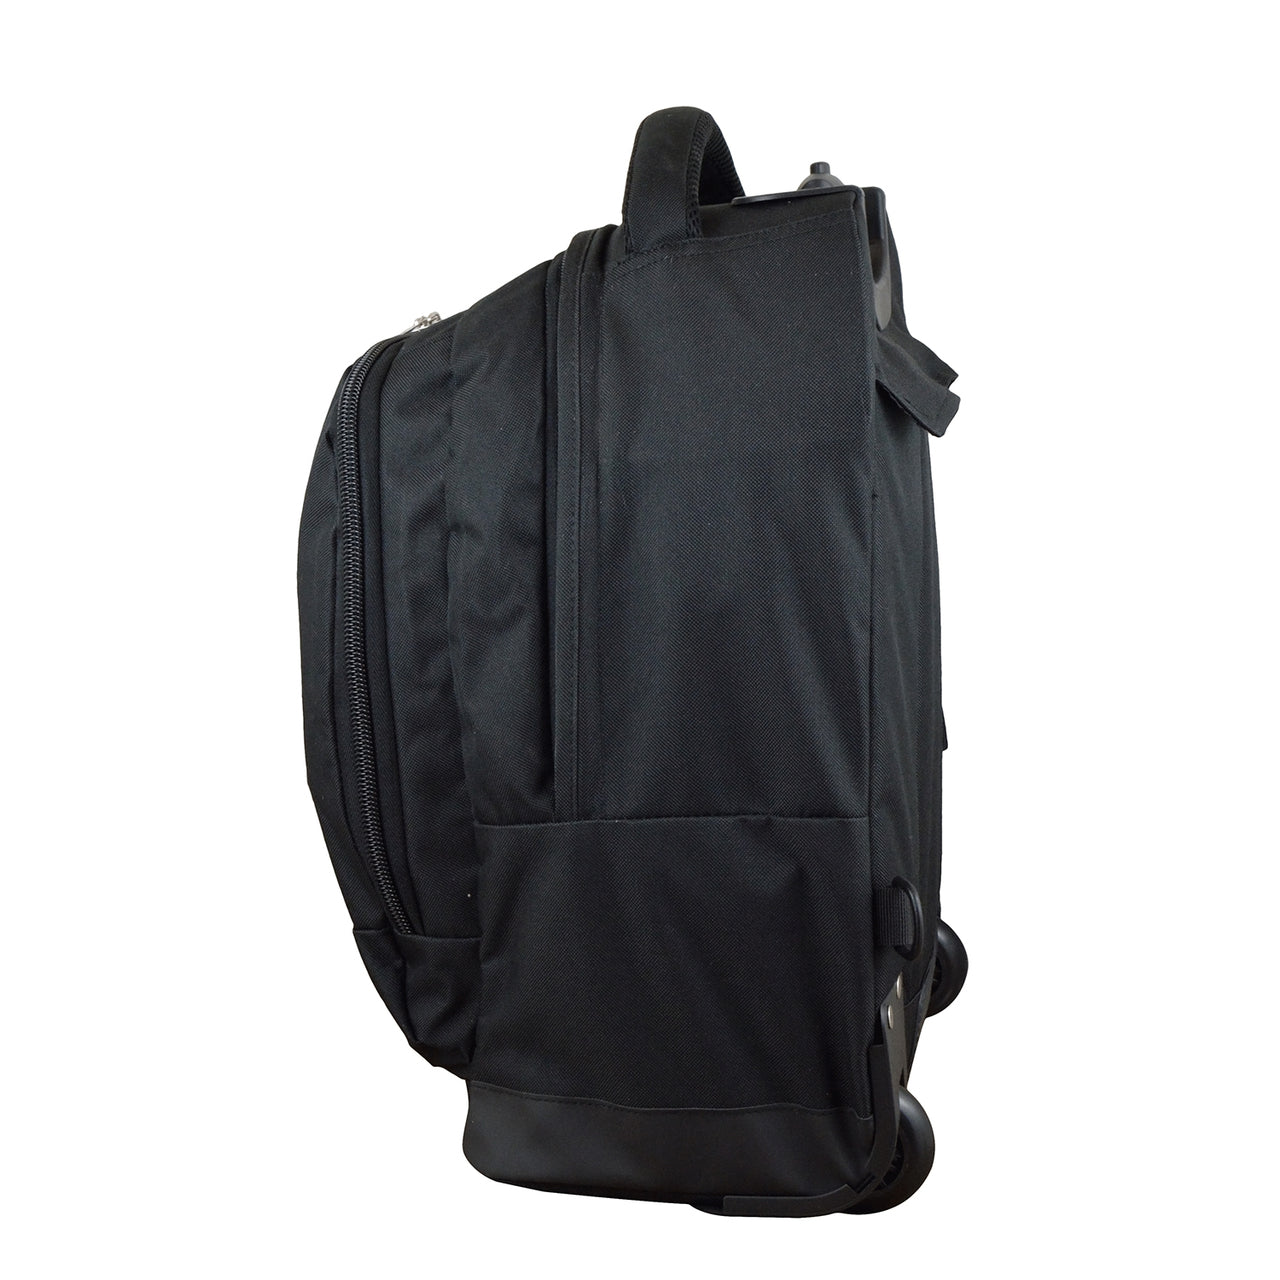 Alabama Premium Wheeled Backpack